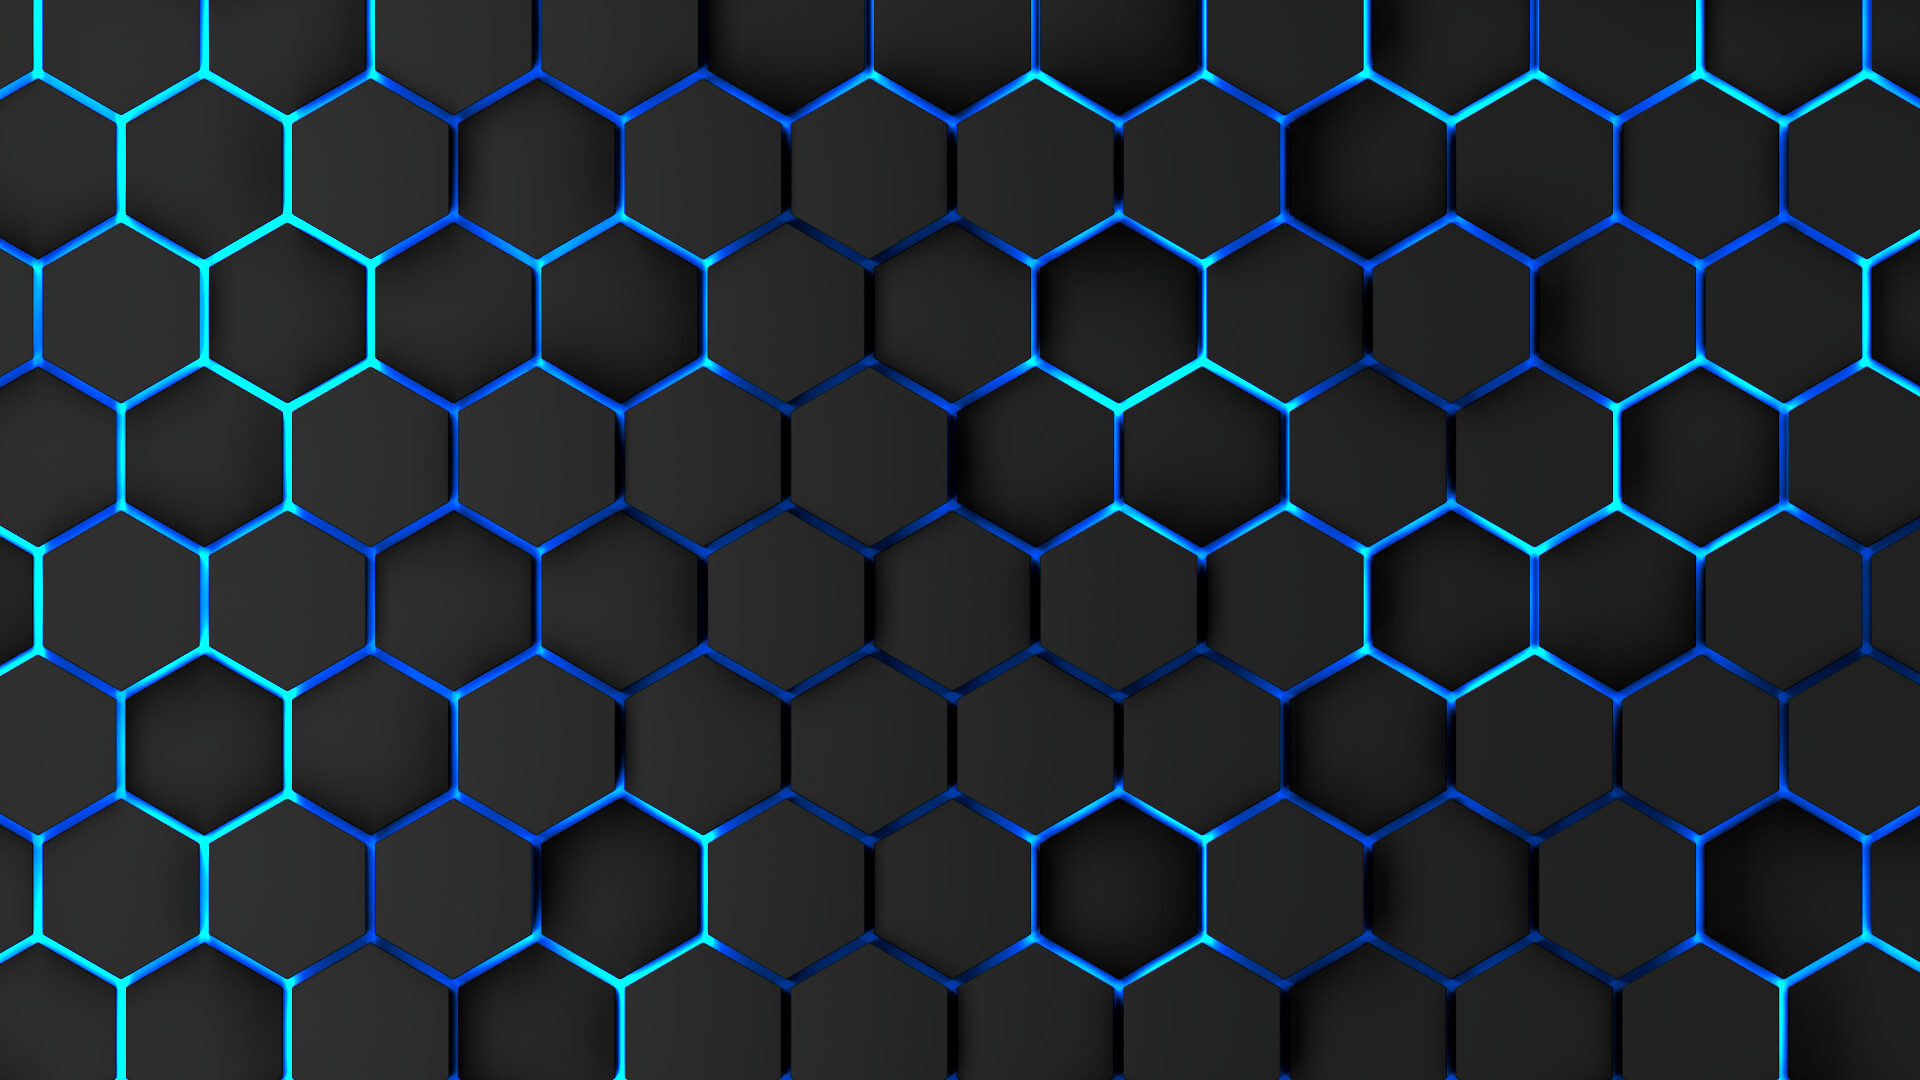 ArtStation - Hexagonal Abstract Background